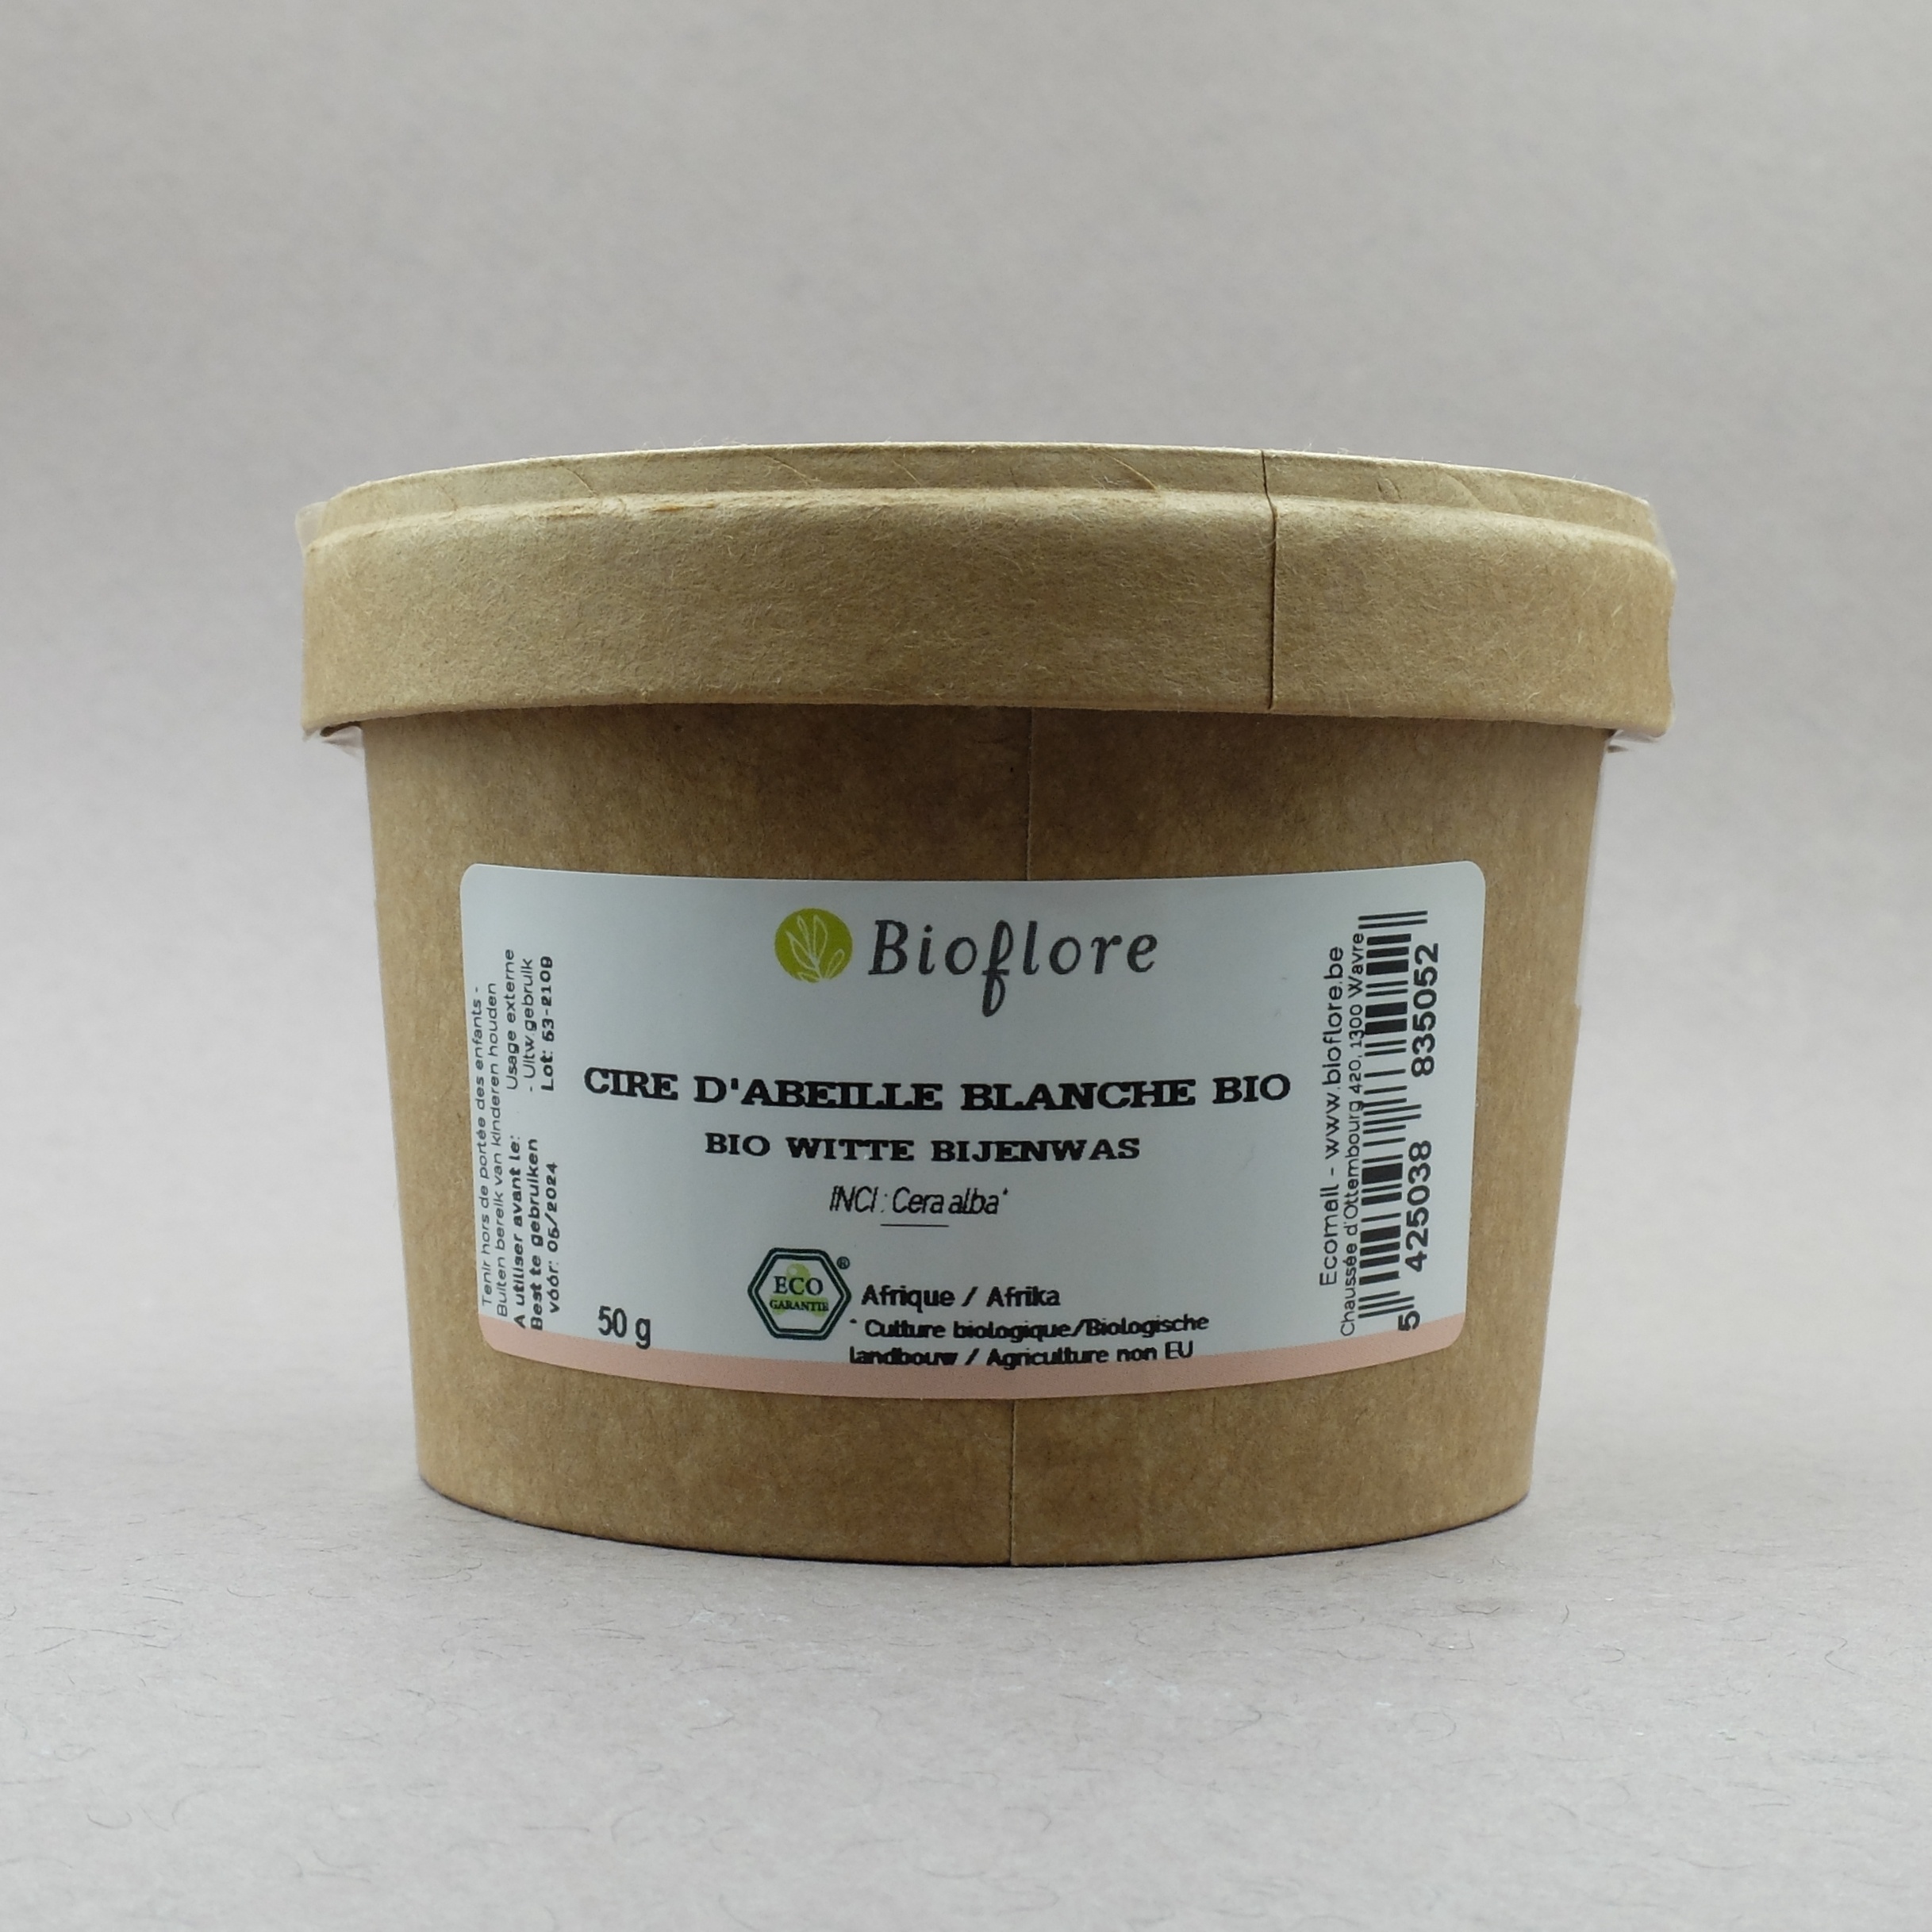 Cire d'abeille blanche Bio - Epaississant 50g - Bioflore